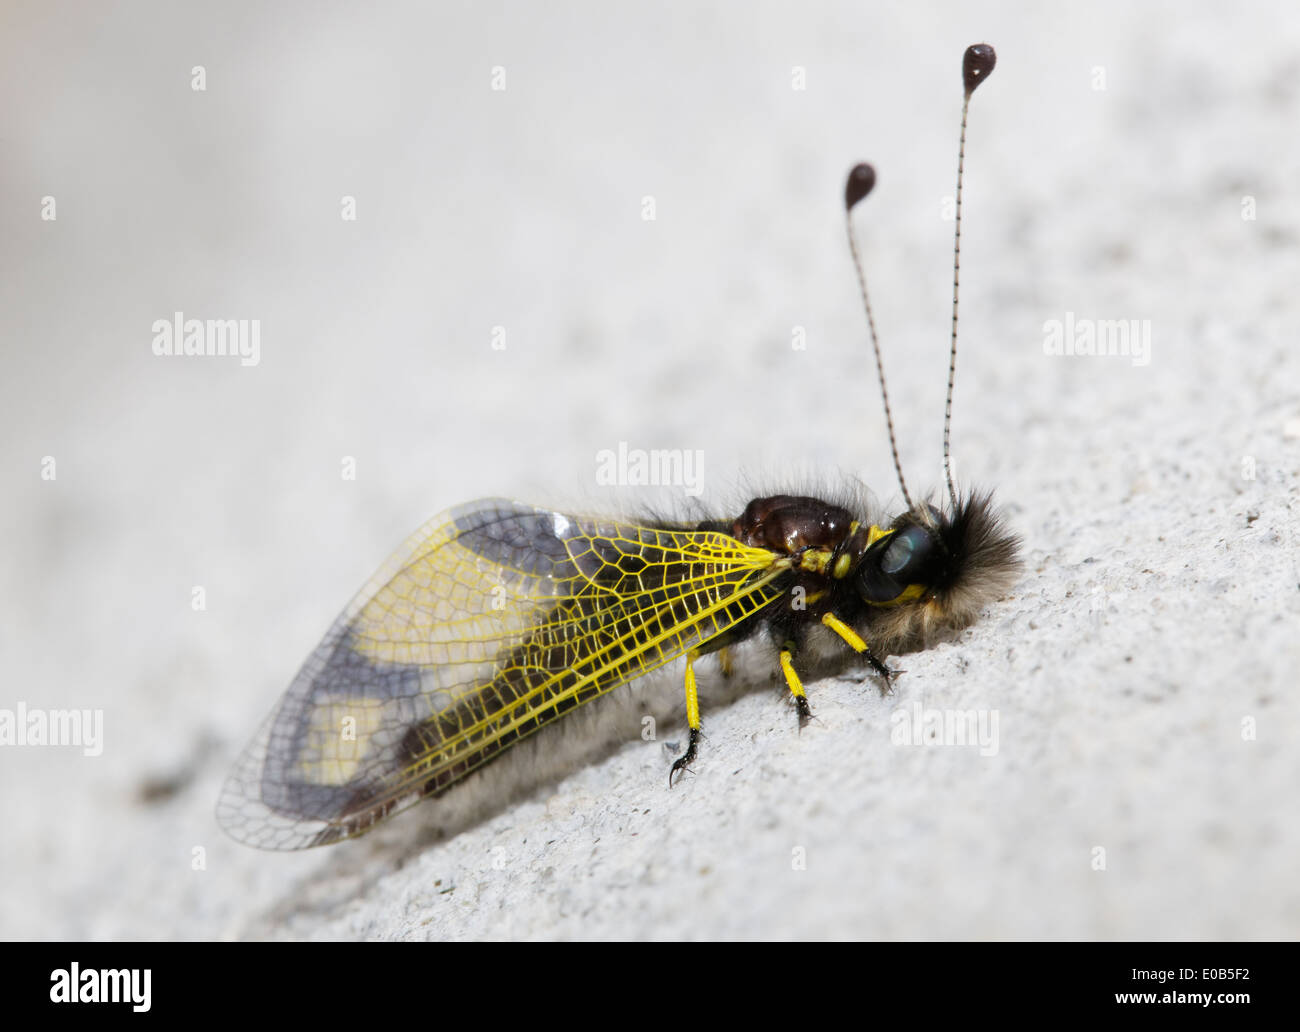 Turkey, Lycia, Libelloides sp, Neuroptera Stock Photo